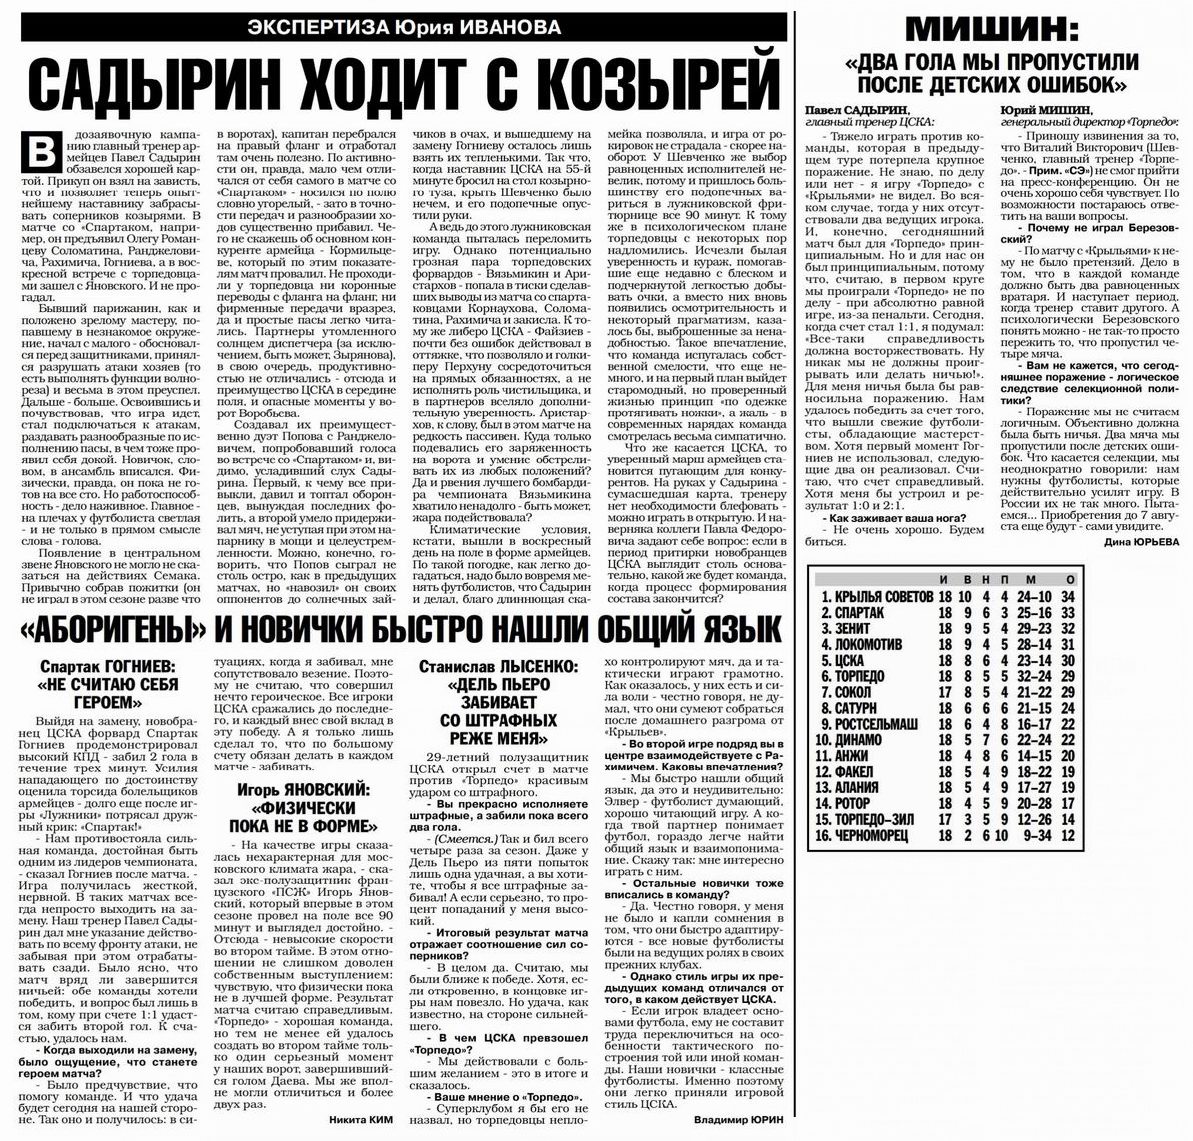 2001-07-22.TorpedoM-CSKA.1